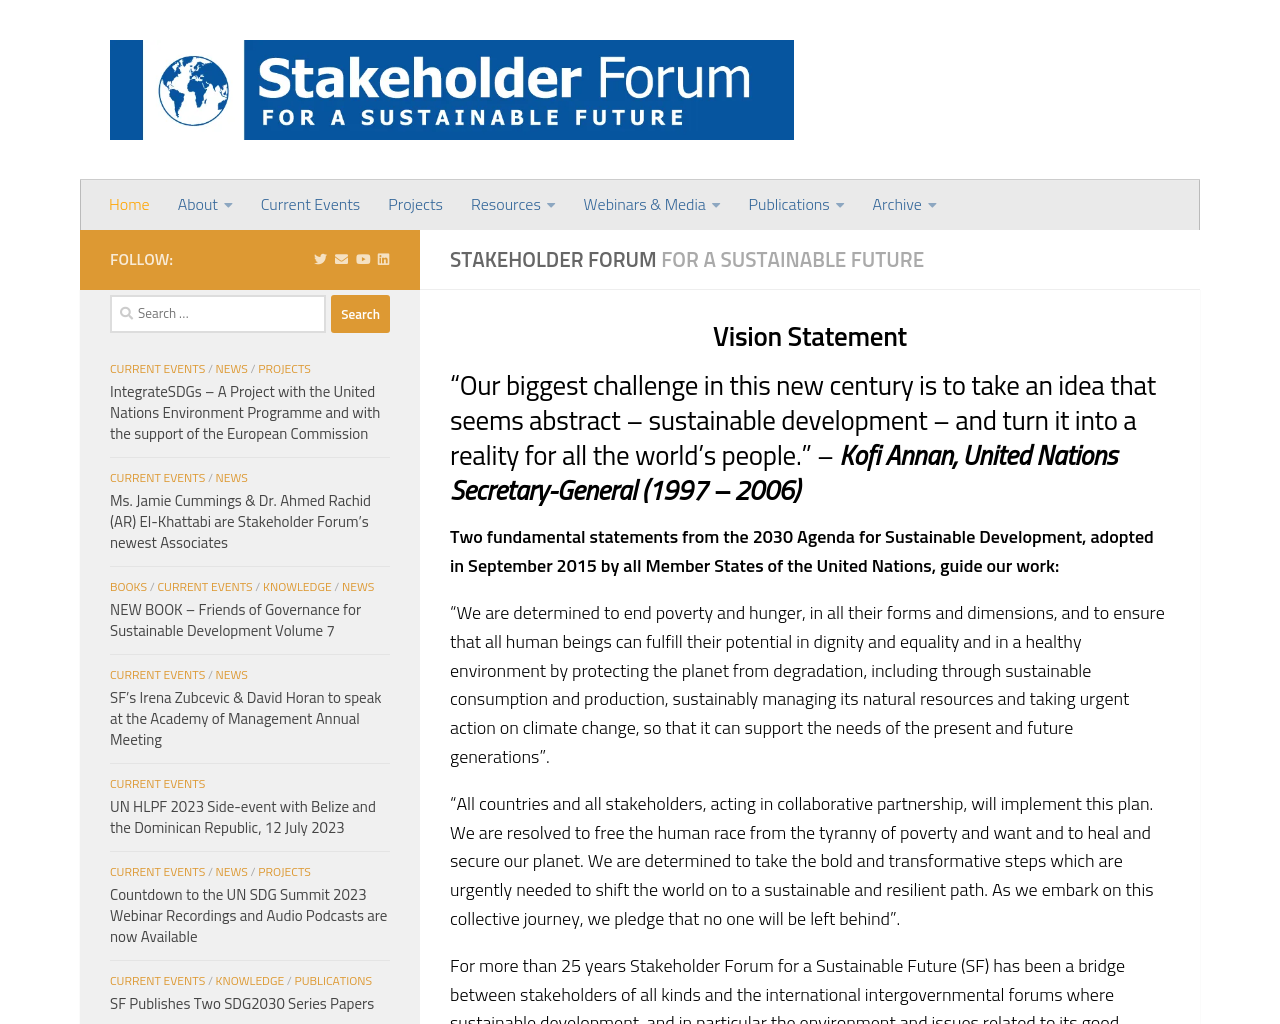 stakeholderforum.org